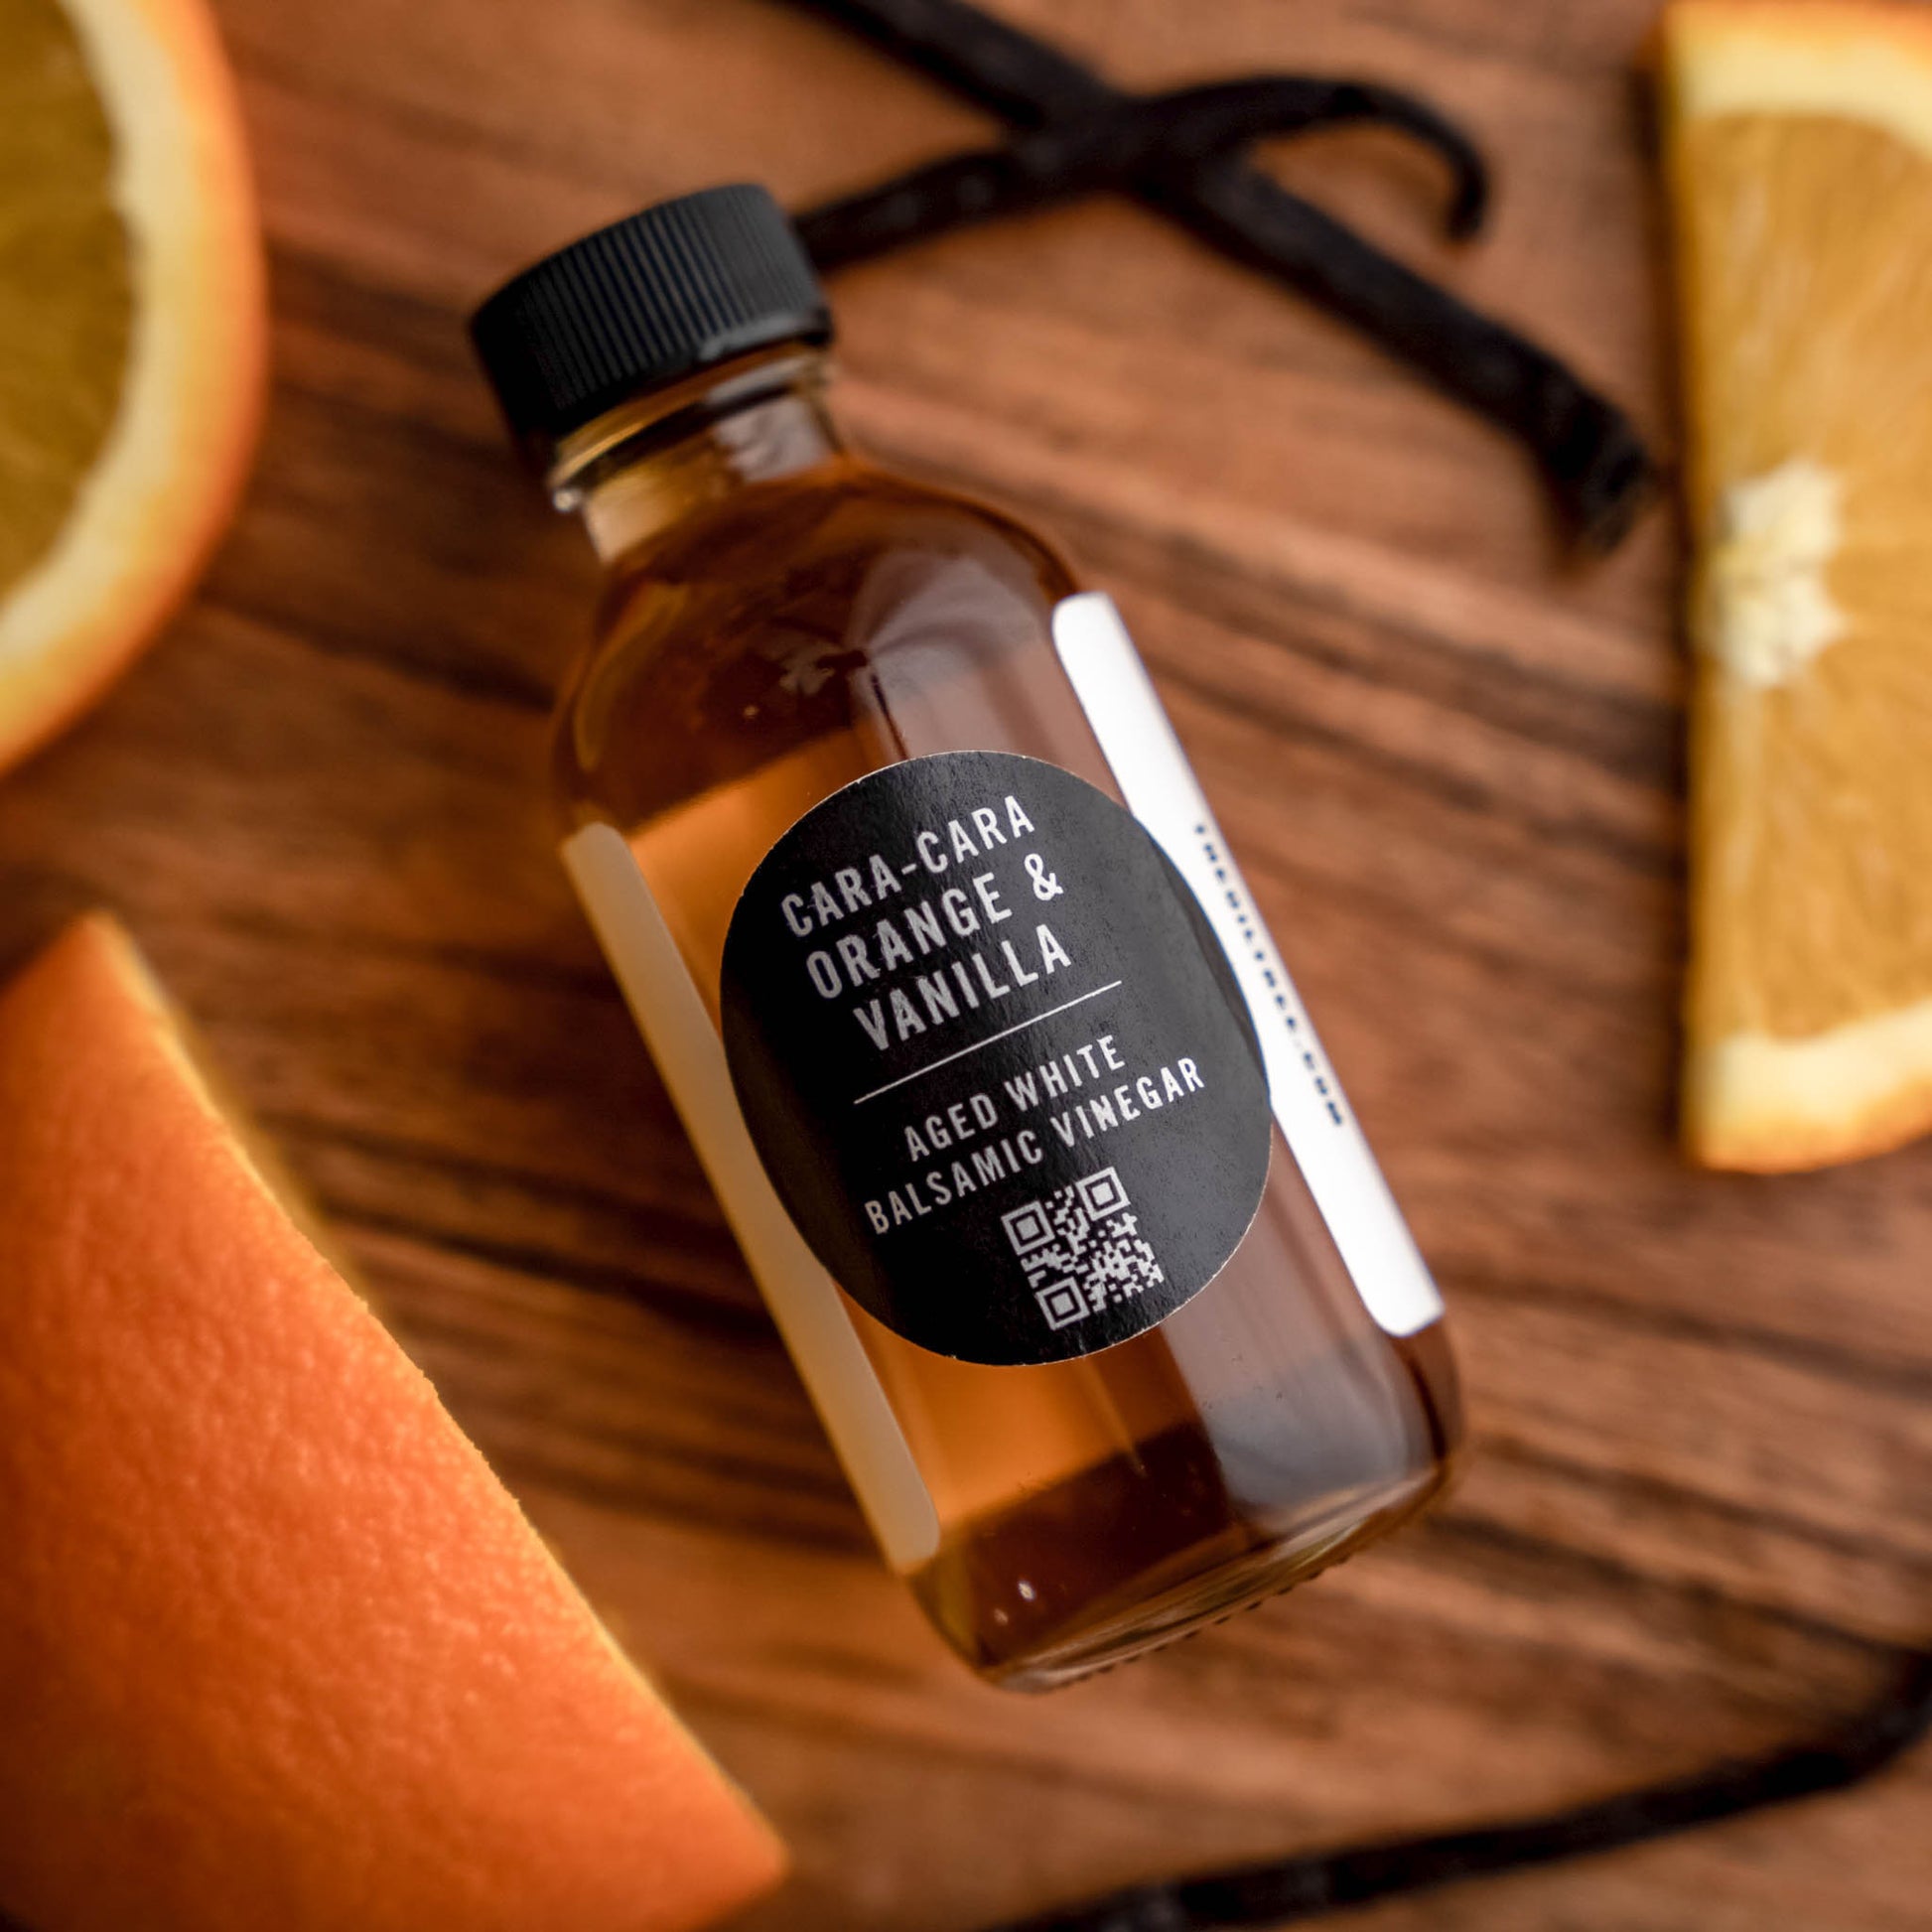 Cara Cara Orange Vanilla Aged White Balsamic Vinegar